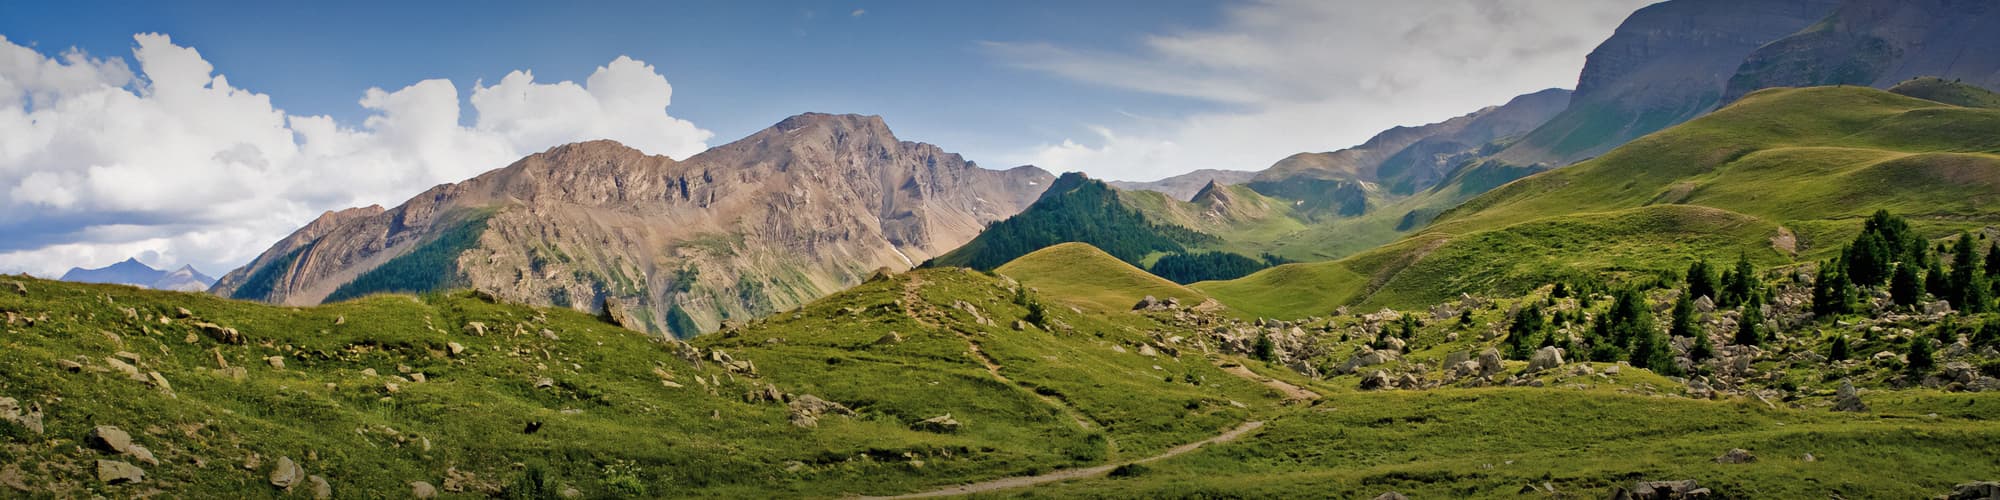 Voyage en famille Alpes du Sud © Uolir / Adobe Stock